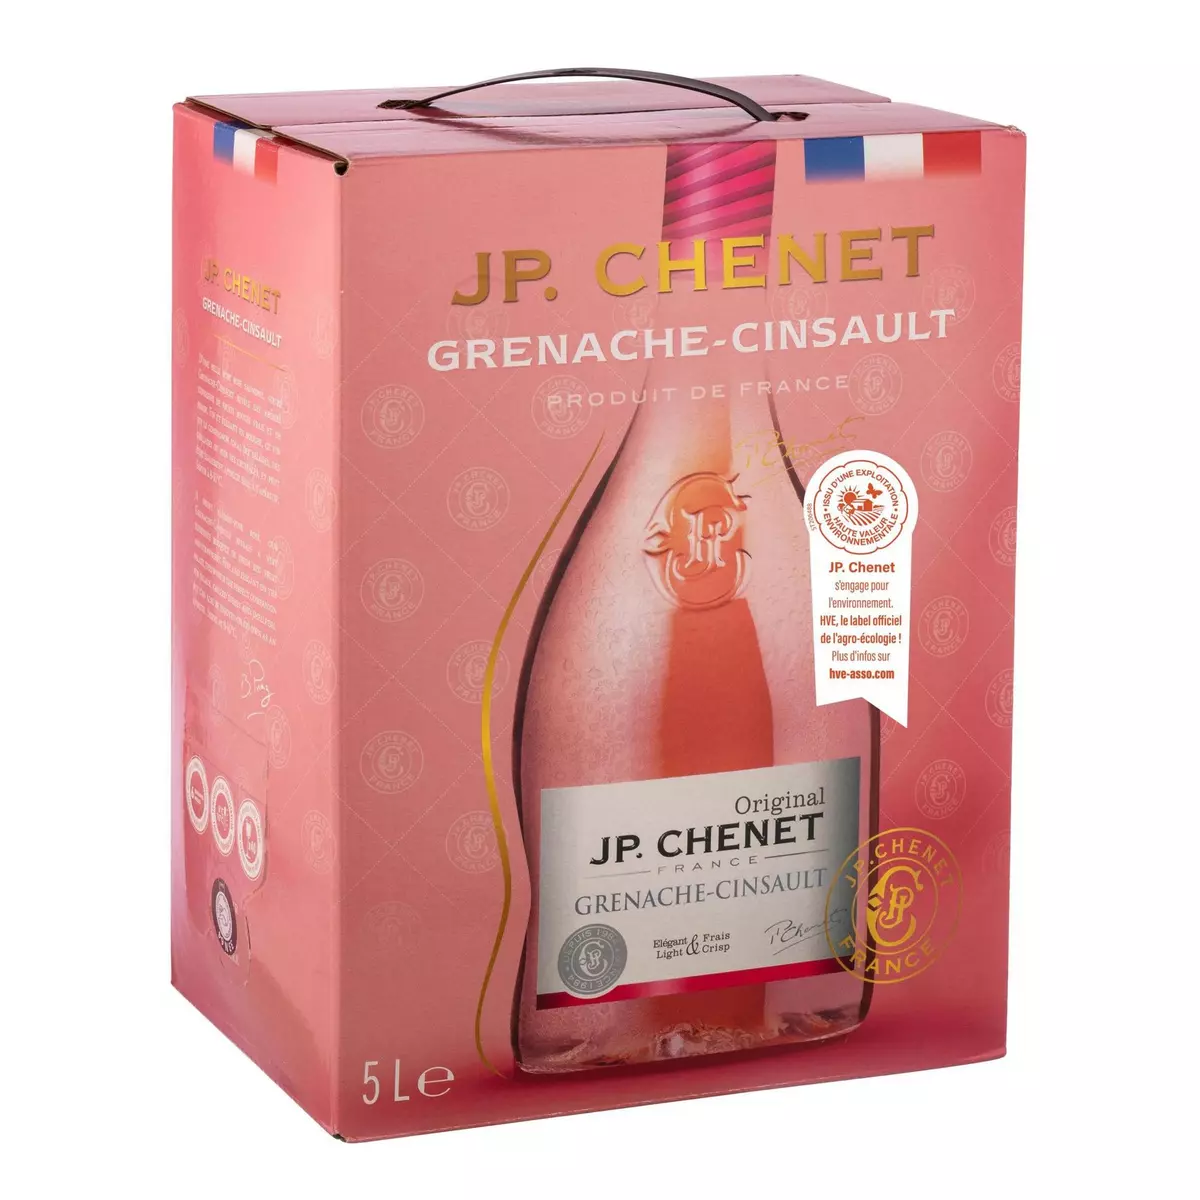 IGP Pays-d'Oc J.P Chenet grenache-cinsault rosé bib Grand format 5l